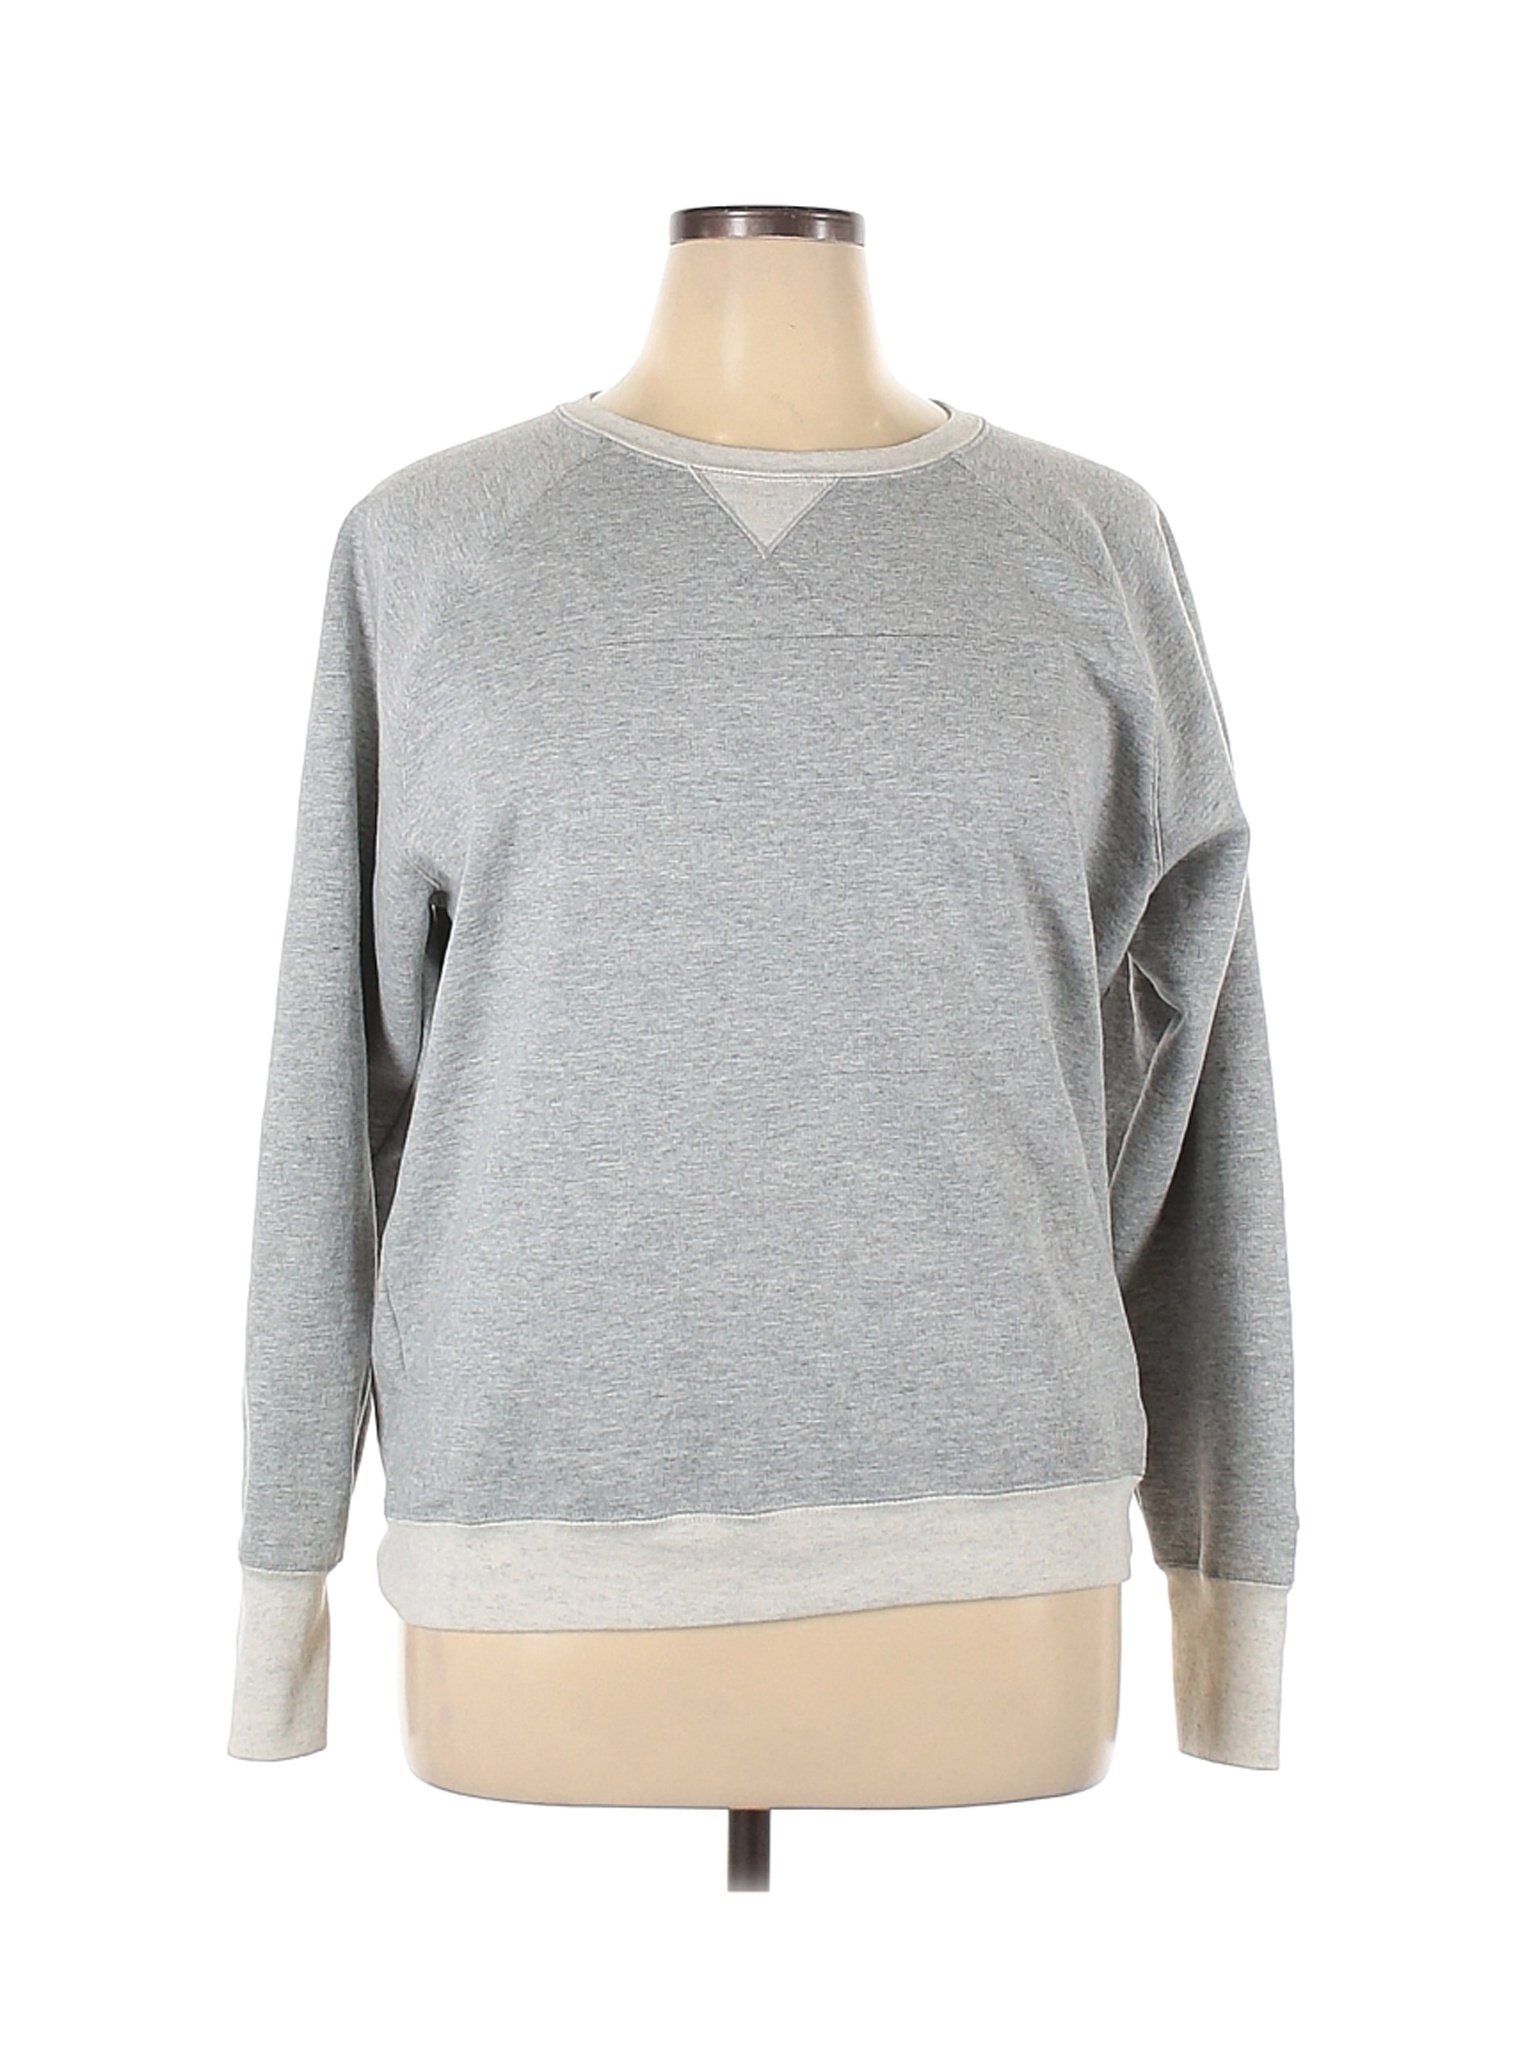 Champion Women Gray Sweatshirt XL | eBay